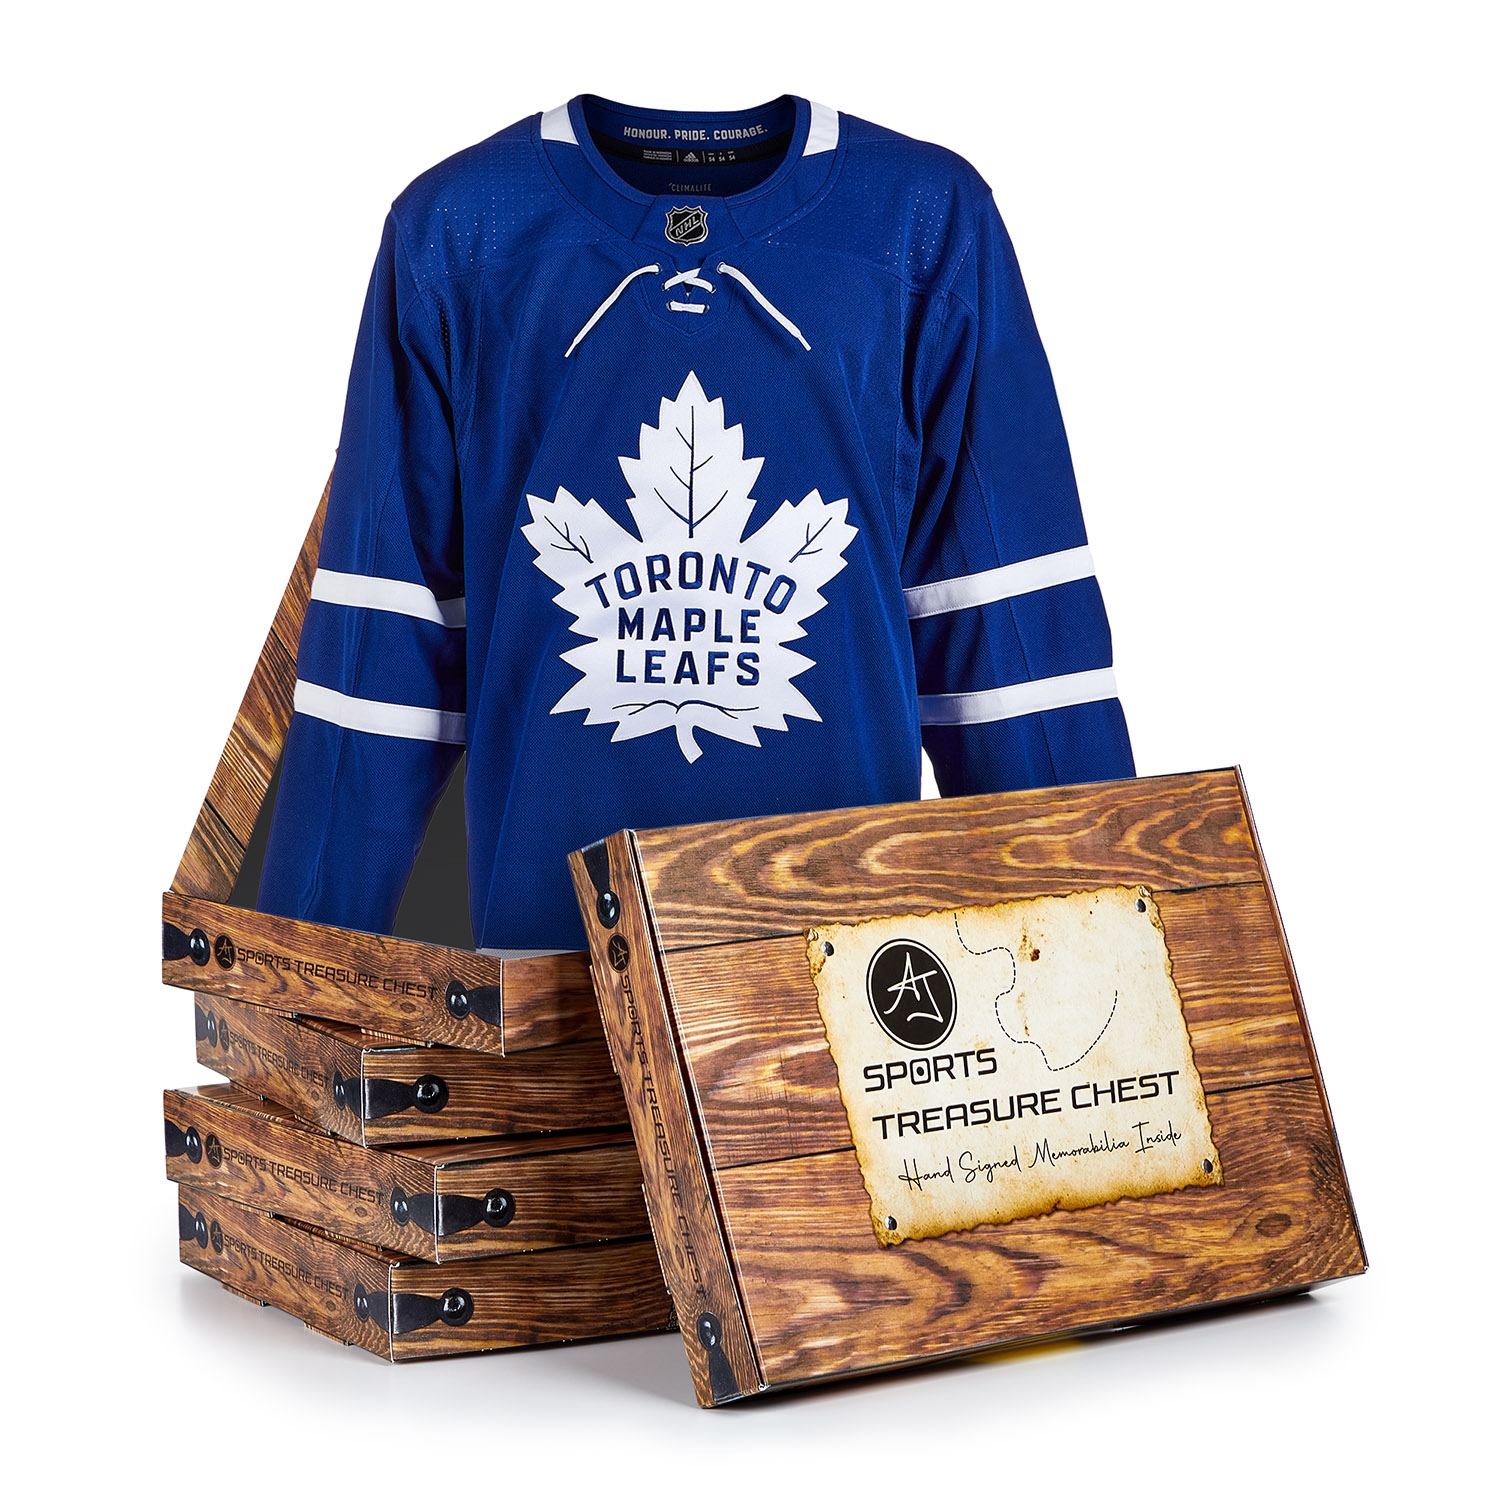 AJ Sports Toronto Hockey Hat Trick Signature Treasure Chest